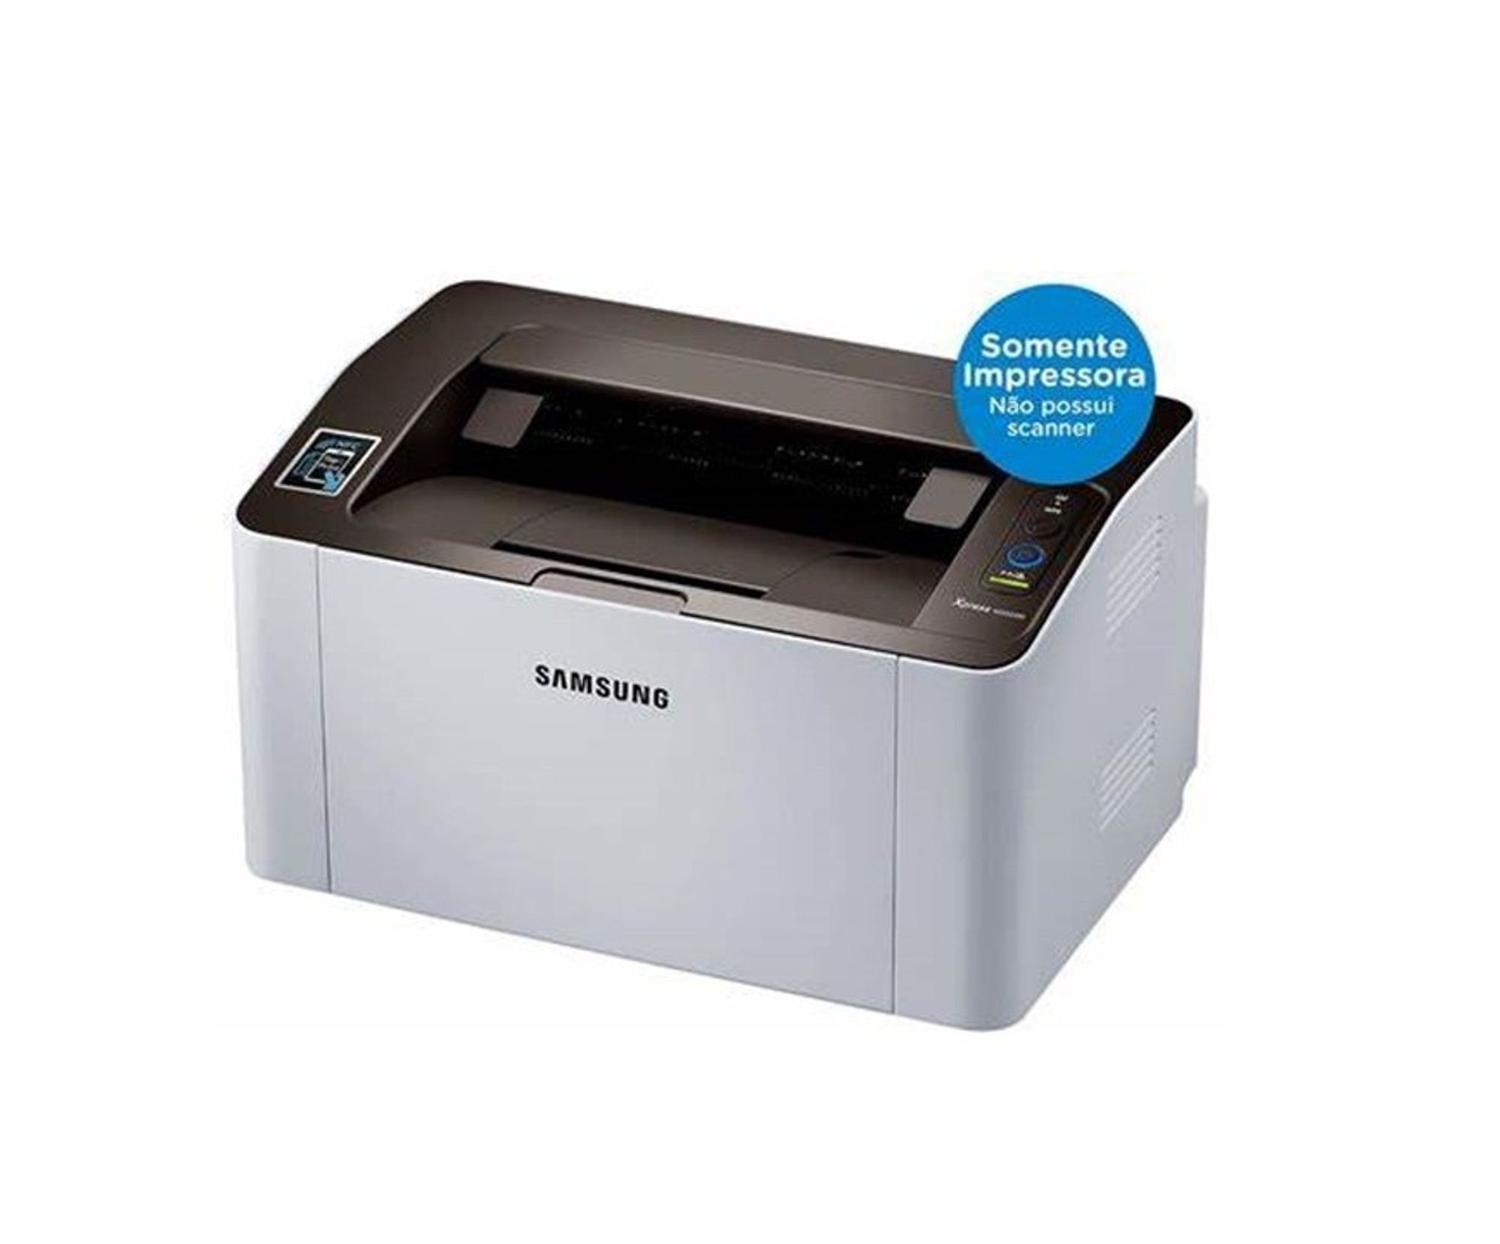 Samsung m2020 купить. Samsung m2020. Принтер самсунг Xpress m2020. Принтер Samsung m 20 20. Samsung Xpress m2020, m2070.